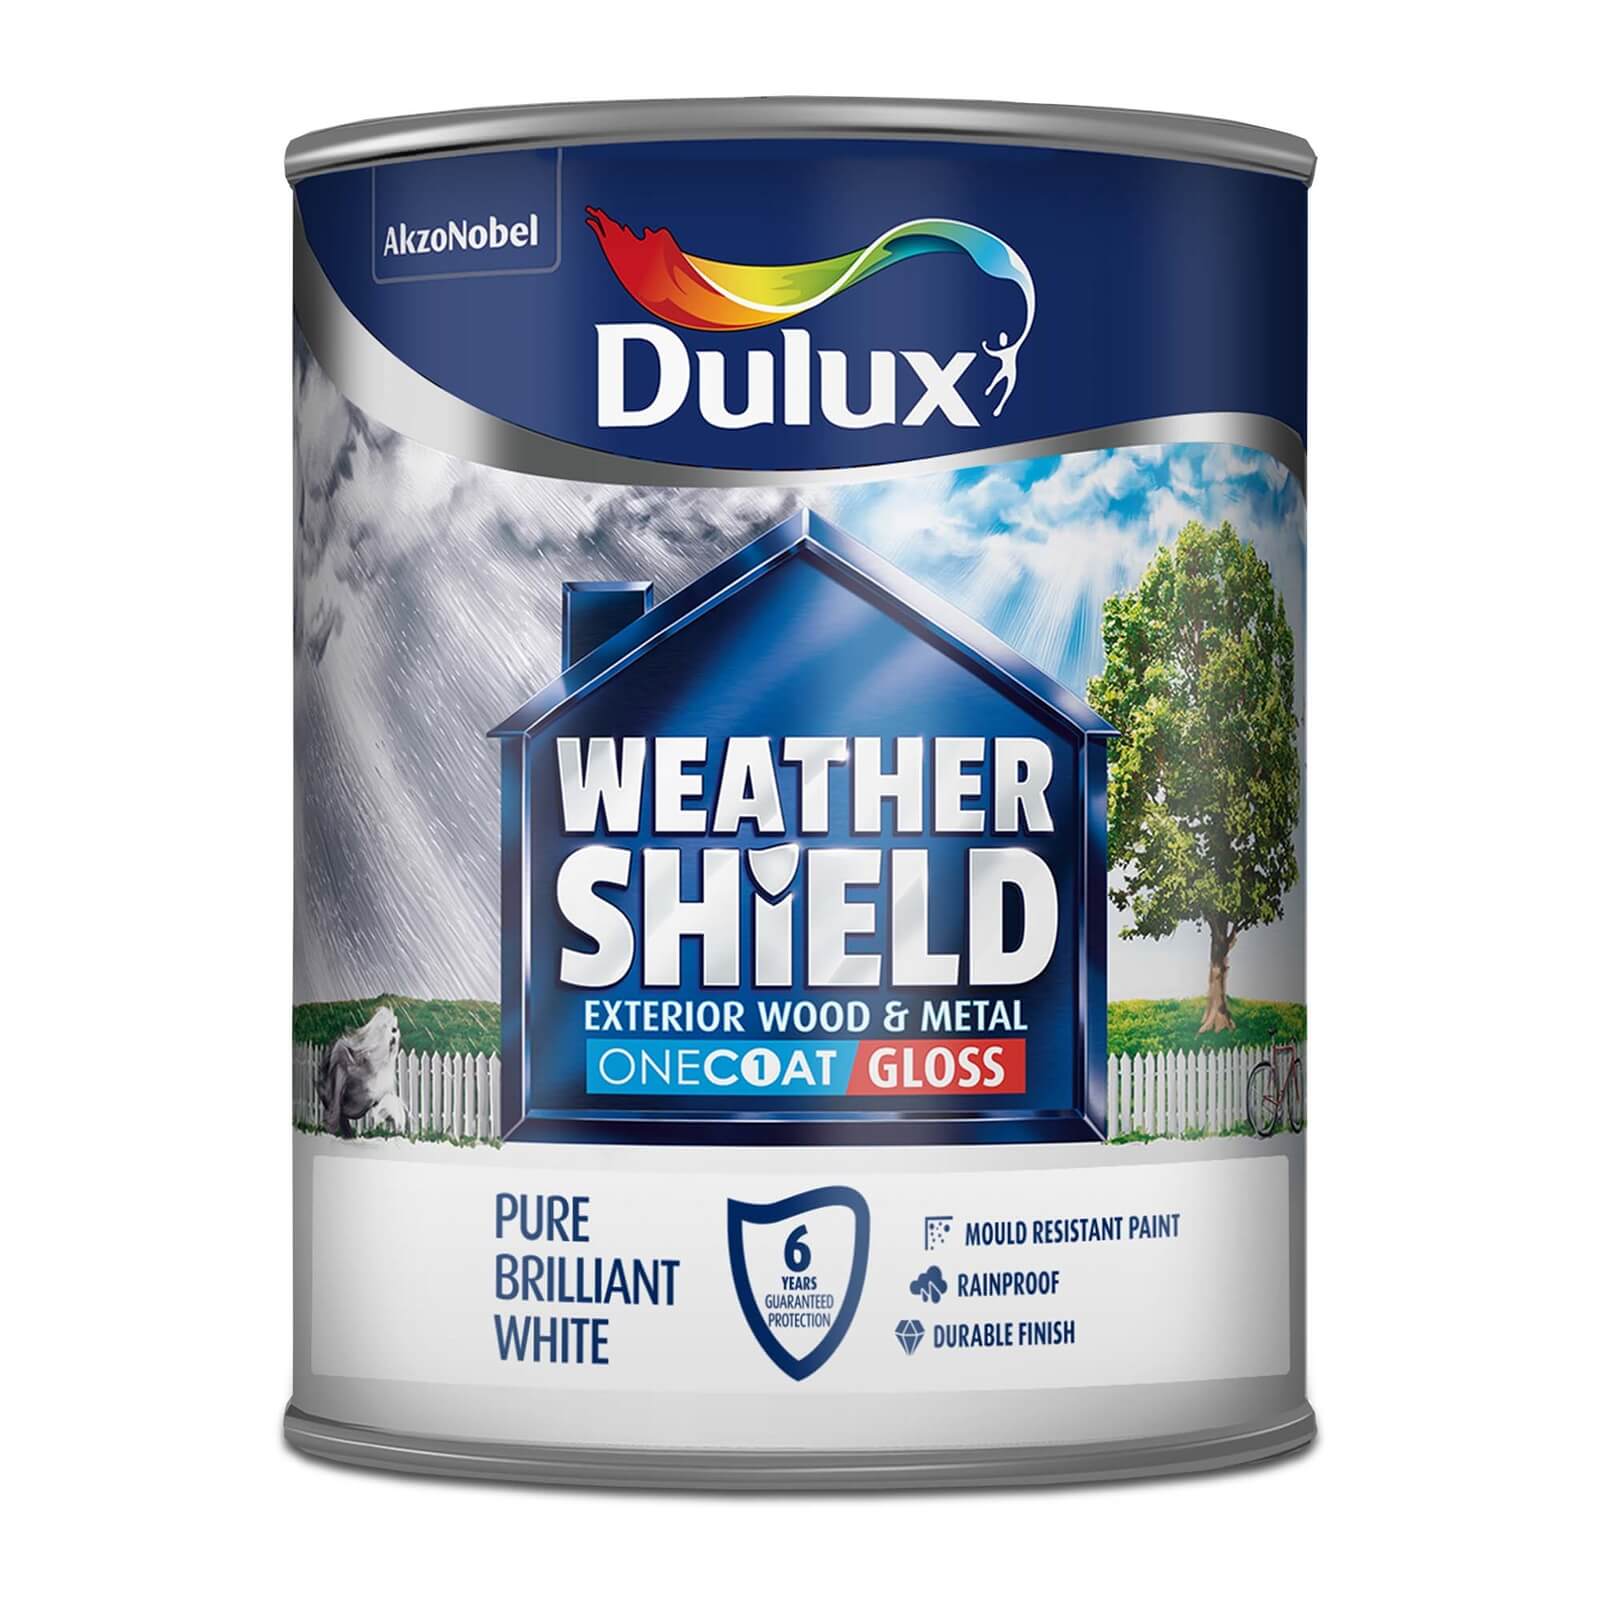 Dulux Weathershield Exterior One Coat Gloss Paint Pure Brilliant White - 750ml